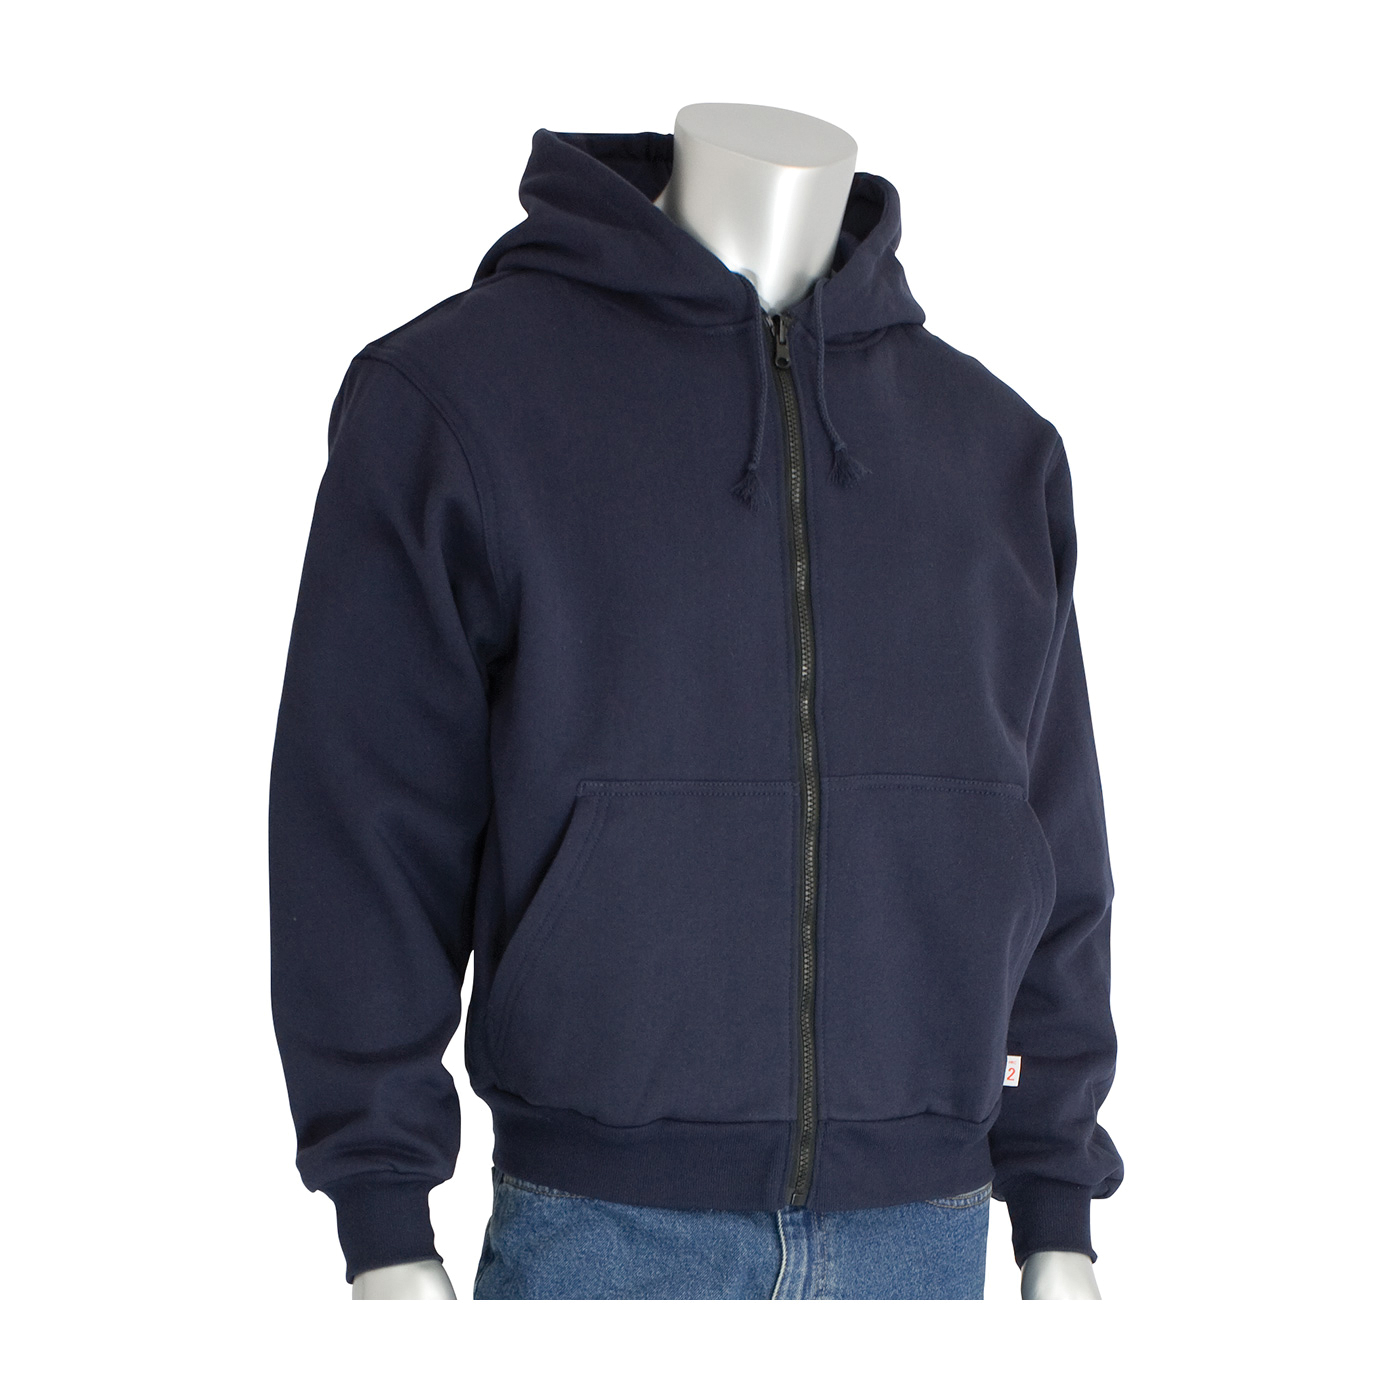 PIP® 385-FRZH-NV/XL Polartec® 385-FRZH Arc and Flame Resistant Sweatshirt, XL, Navy, FR Fleece Knit/100% Cotton, 29-1/2 in Regular, 30-1/2 in Tall L